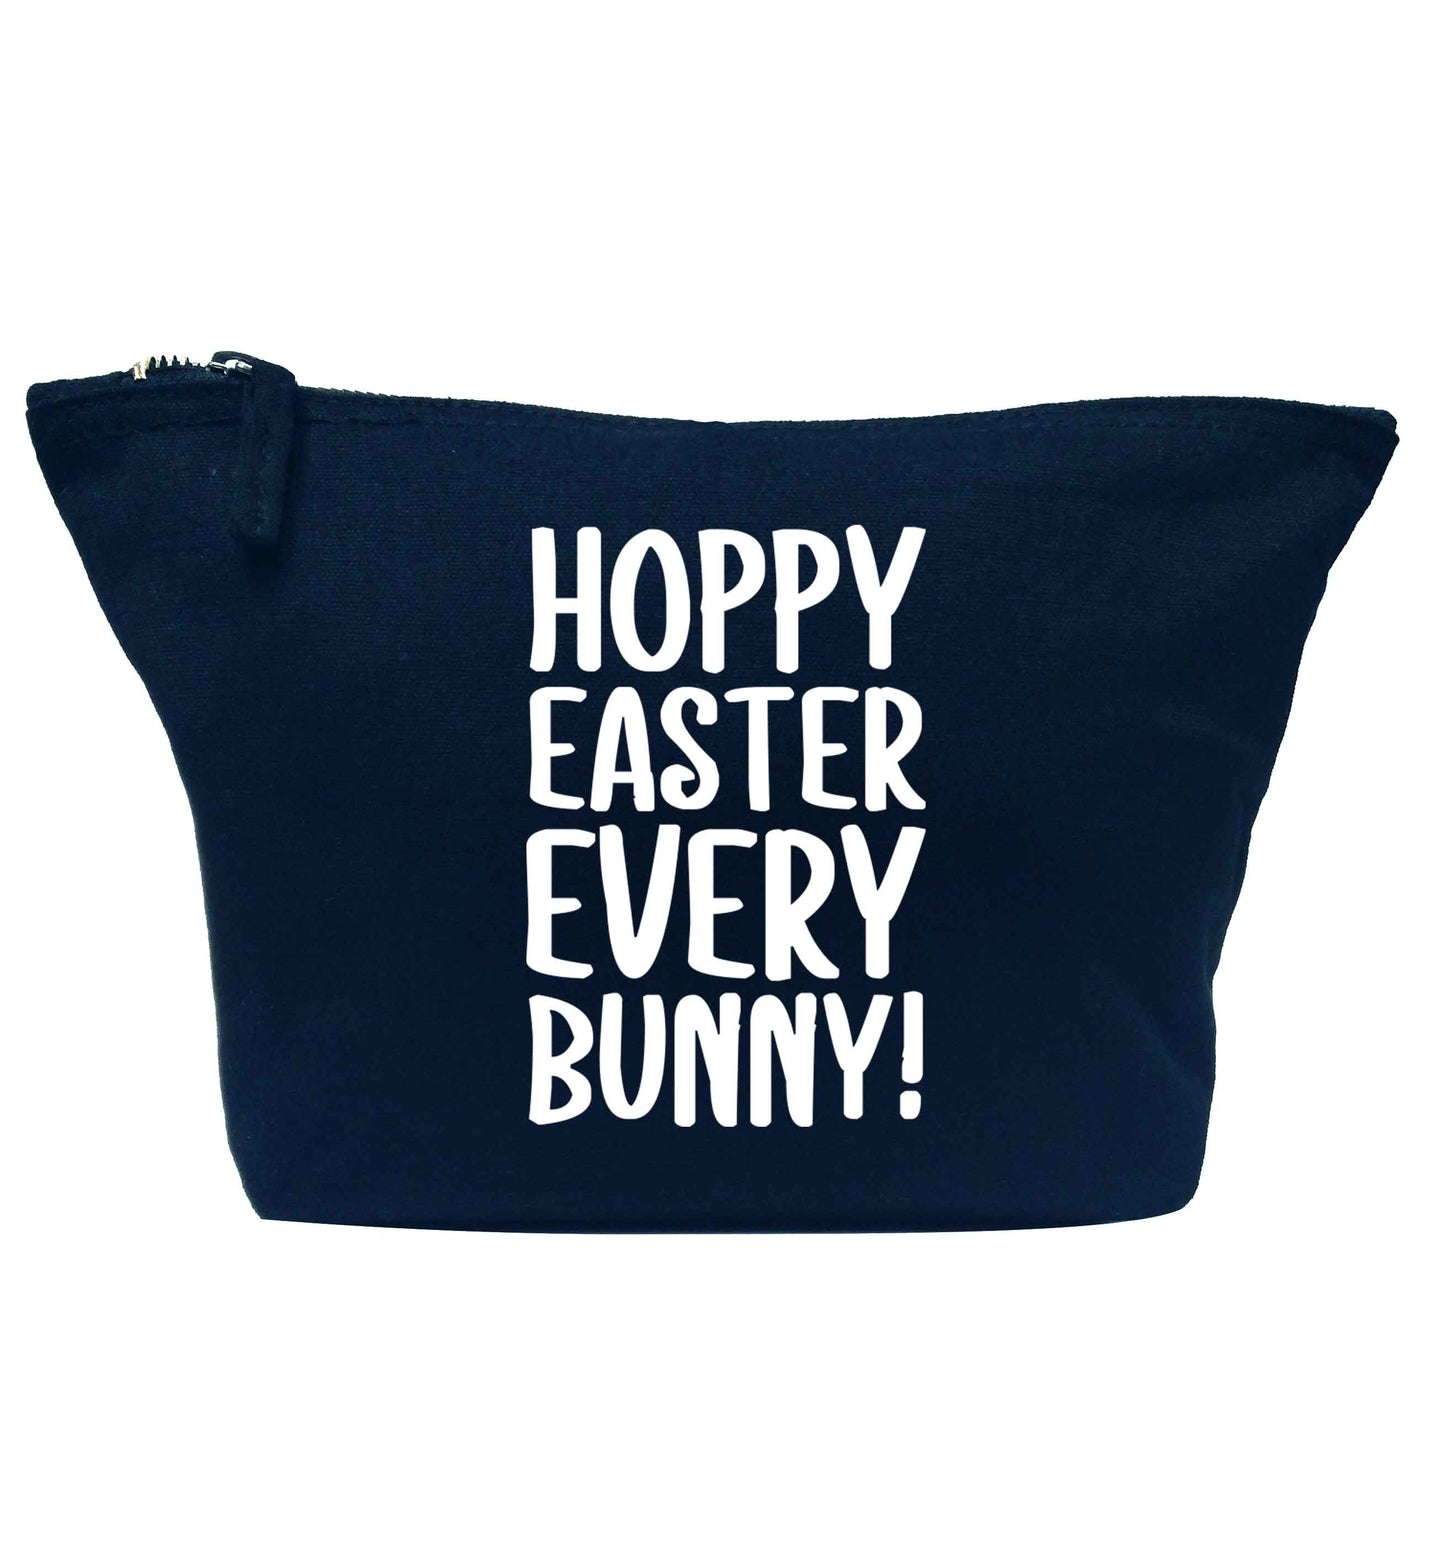 Hoppy Easter every bunny! navy makeup bag